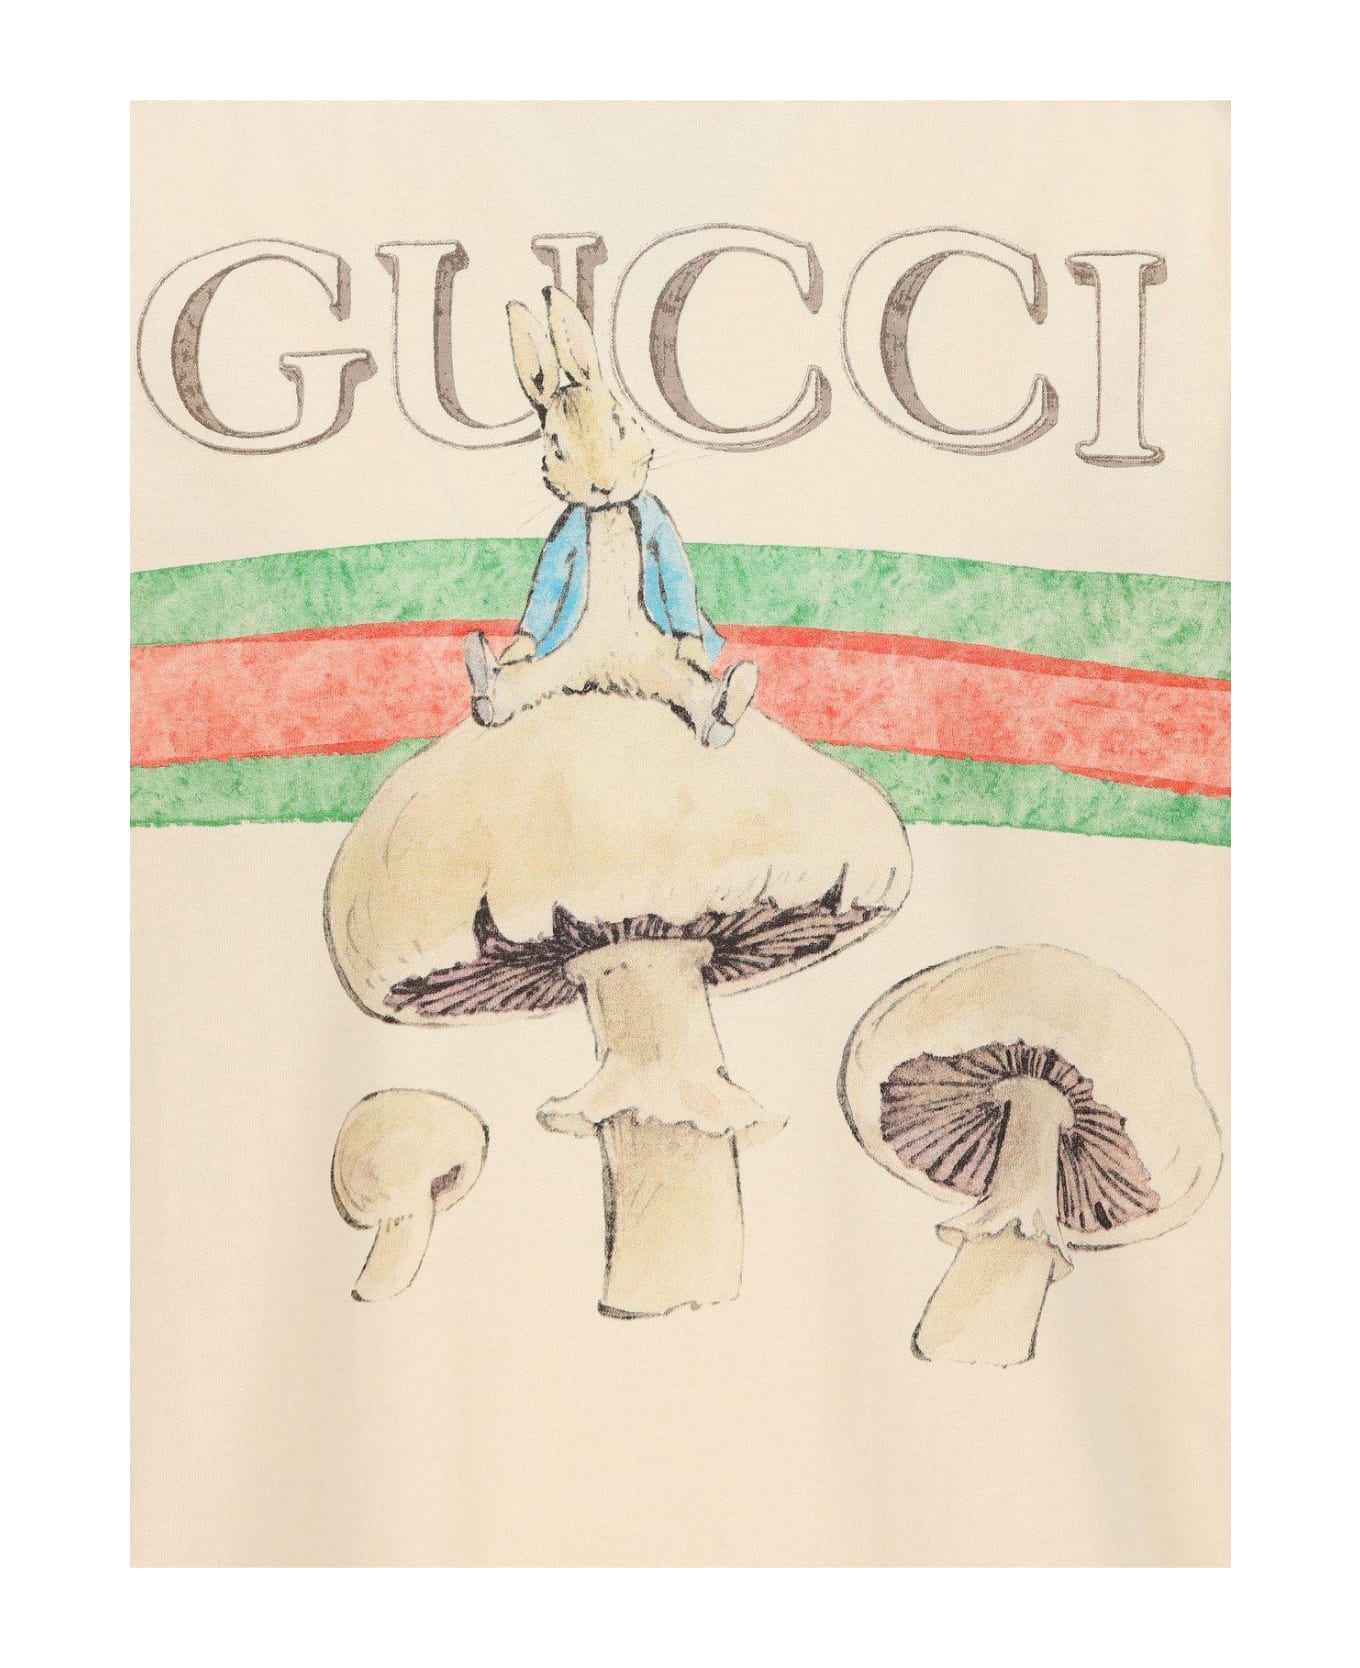 Gucci X Peter Rabbit Printed Jersey T-shirt - IVORY